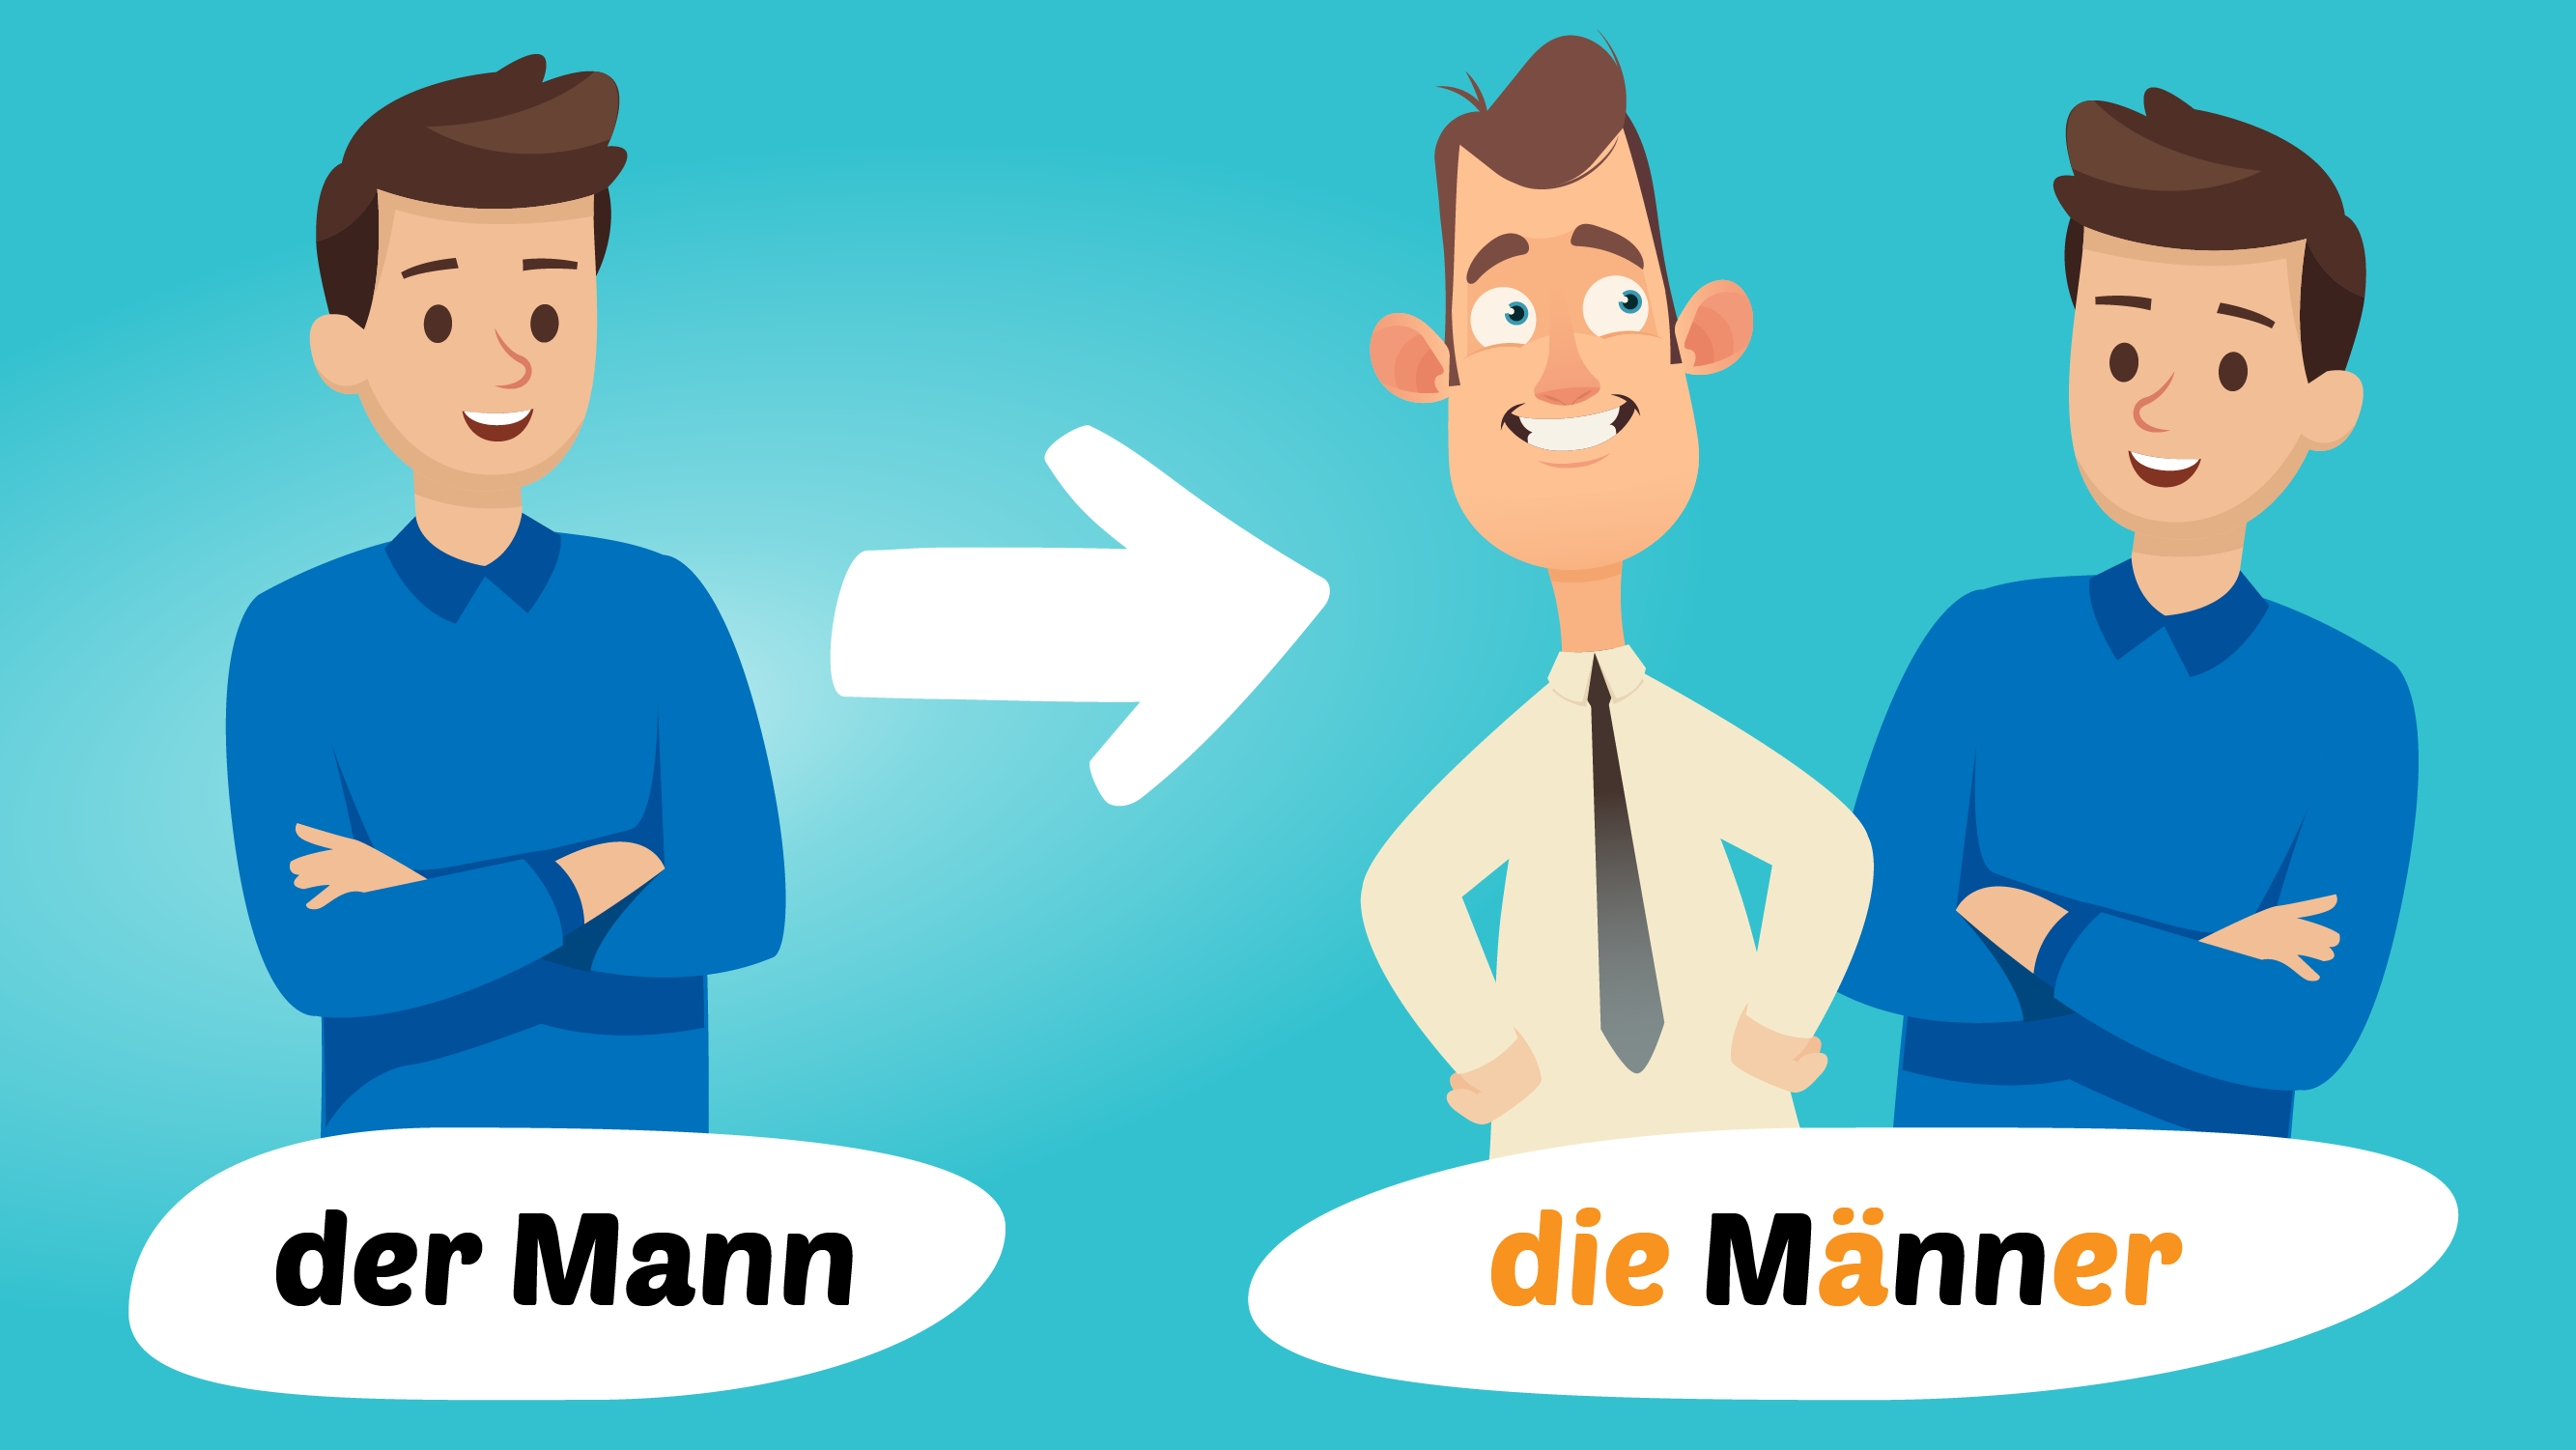 German plurals for one man or several men